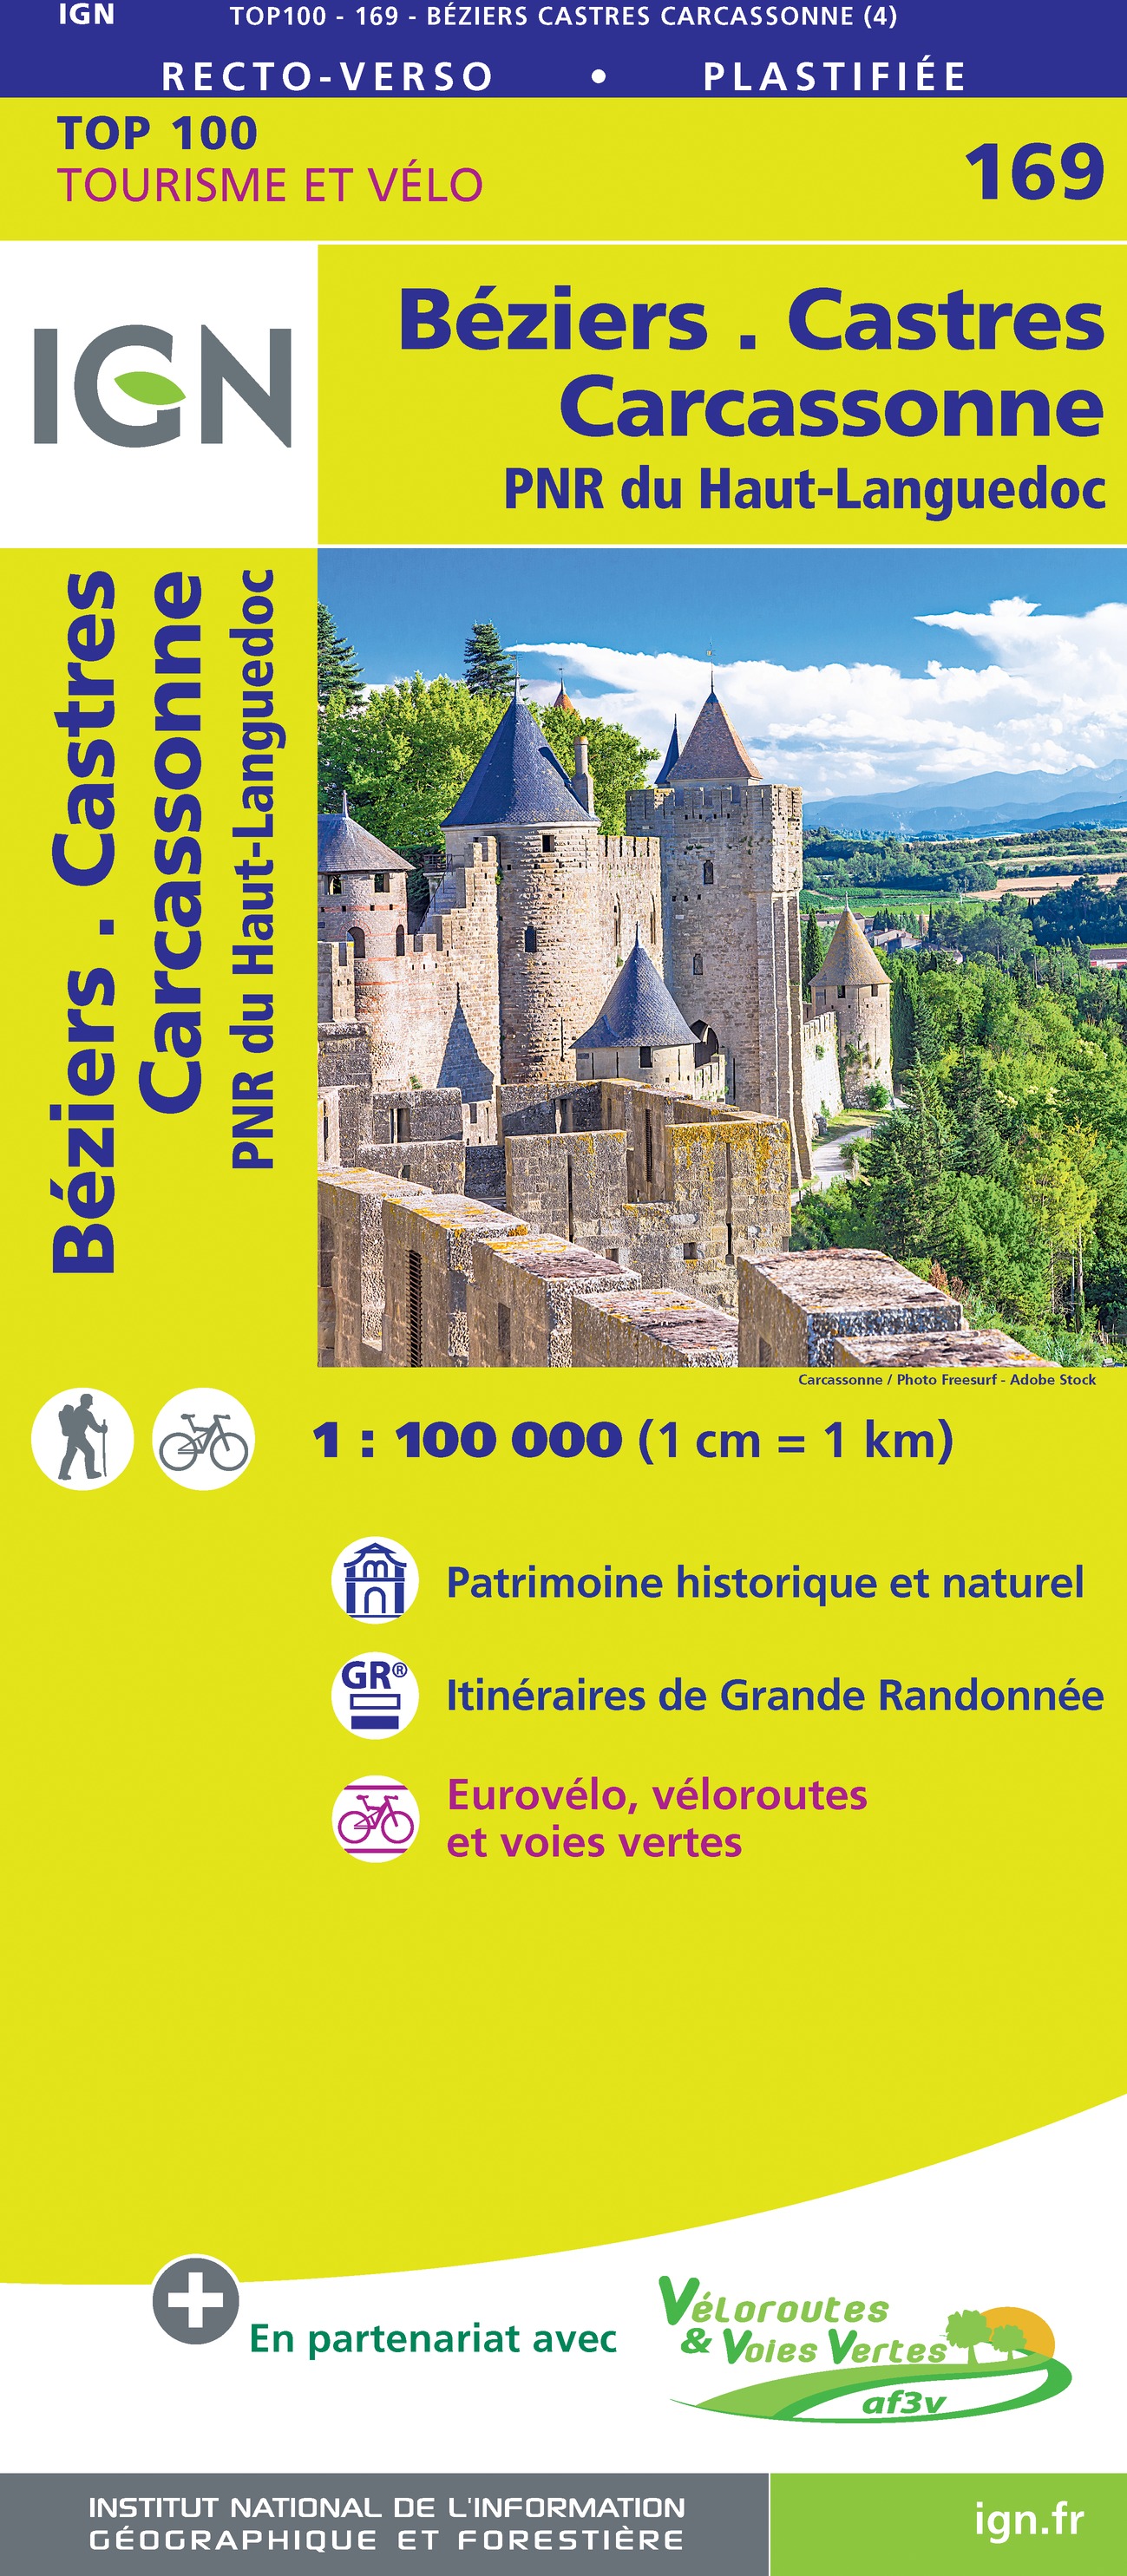 Online bestellen: Fietskaart - Wegenkaart - landkaart 169 Béziers - Castres - Carcassonne | IGN - Institut Géographique National